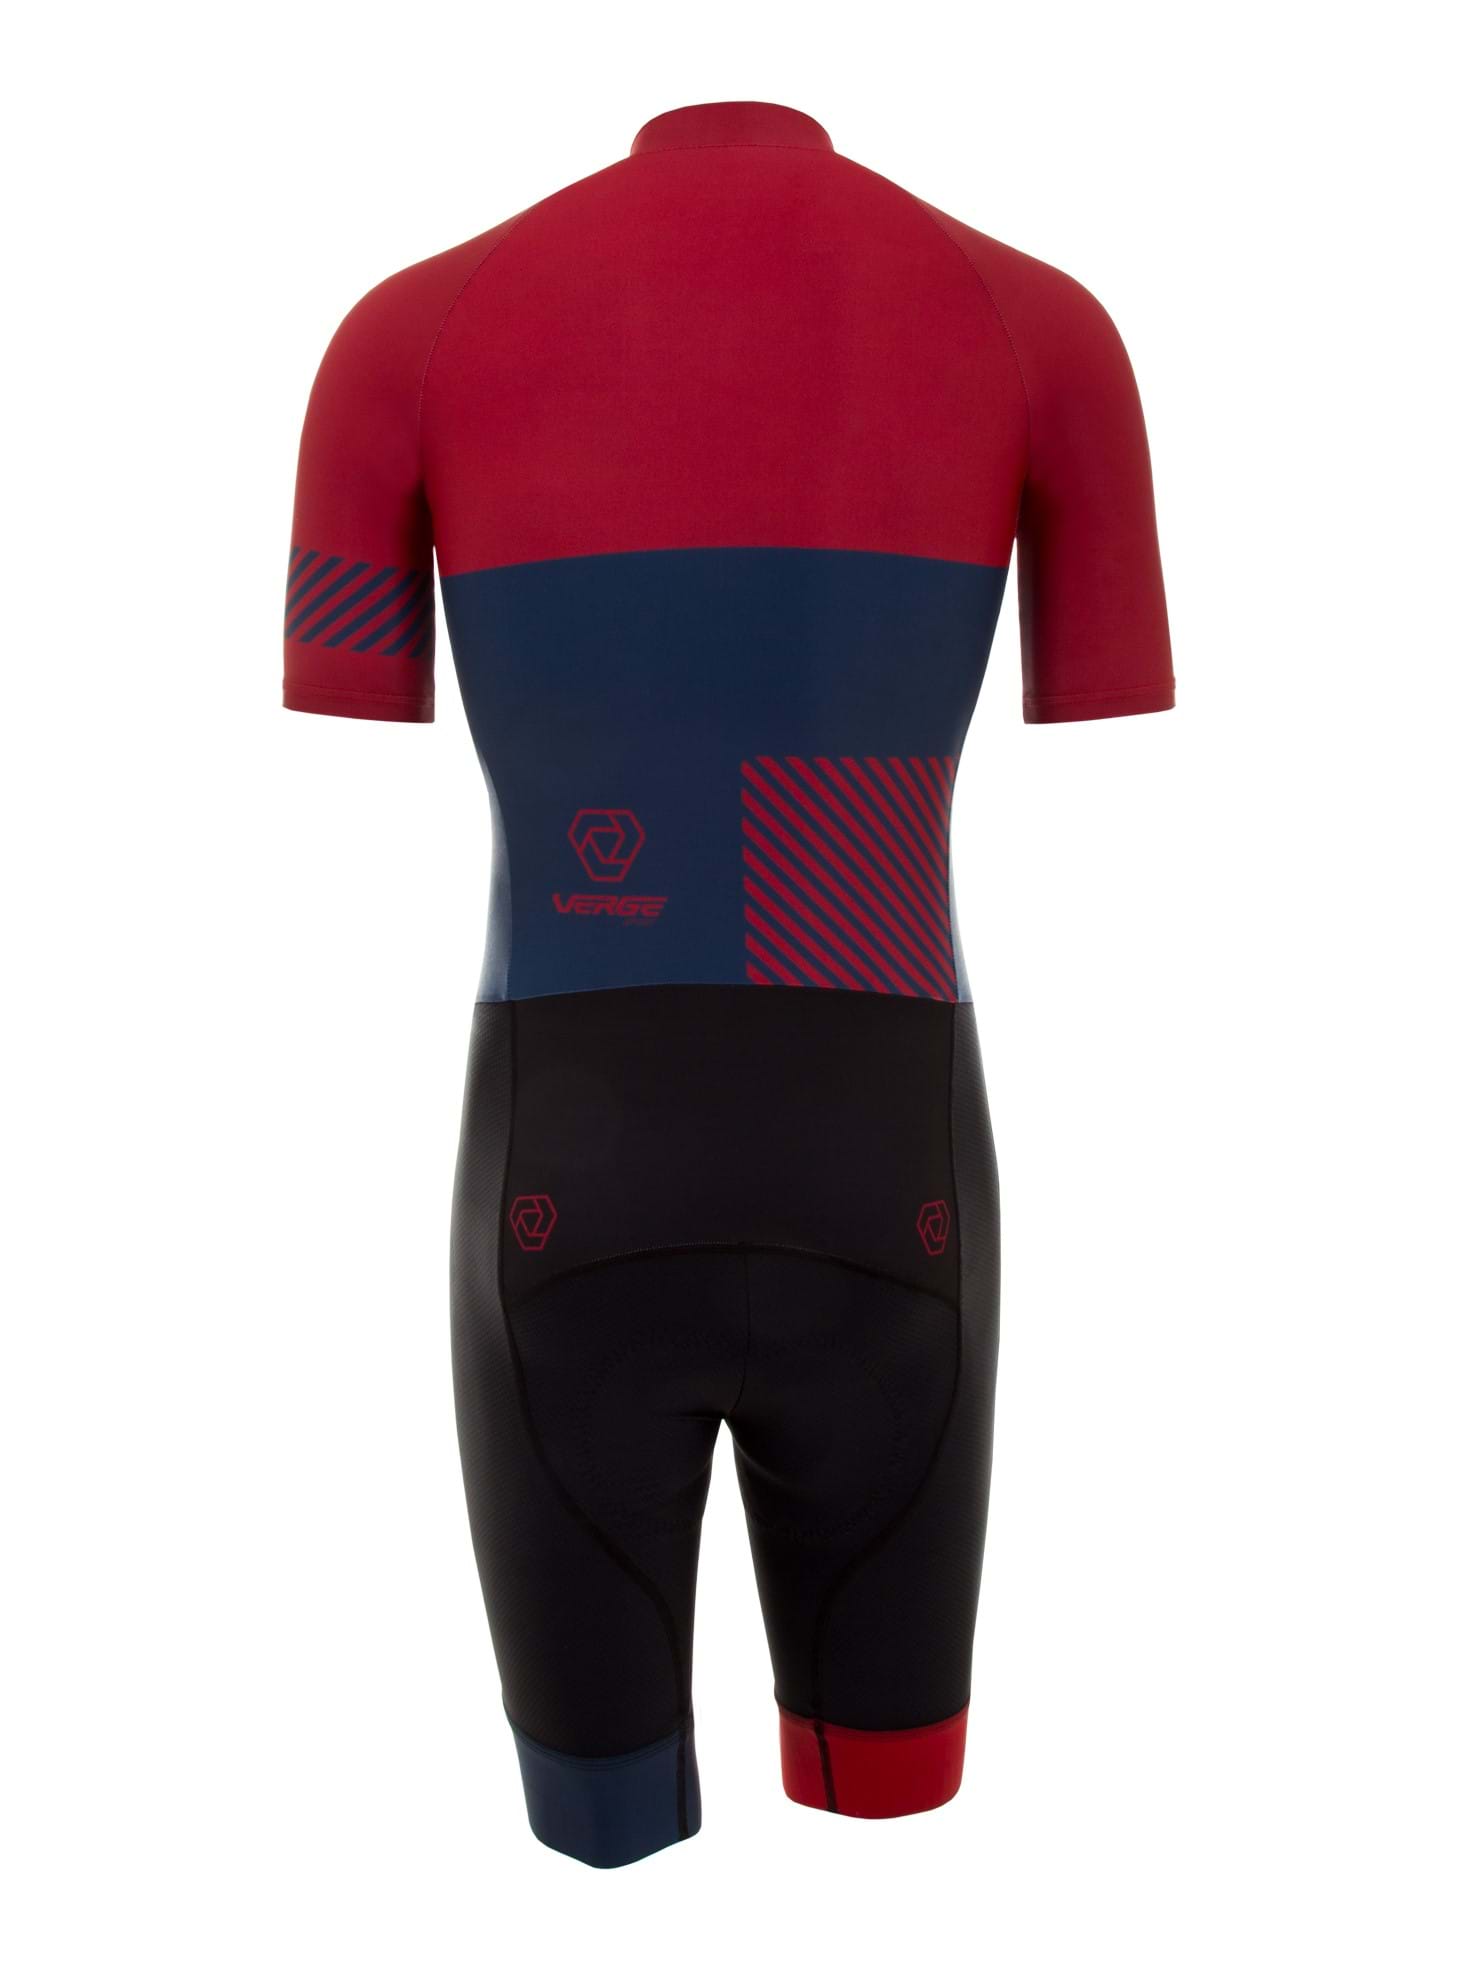 Verge Sport Classic Speedsuit Short Sleeve Cycling Race Skinsuit